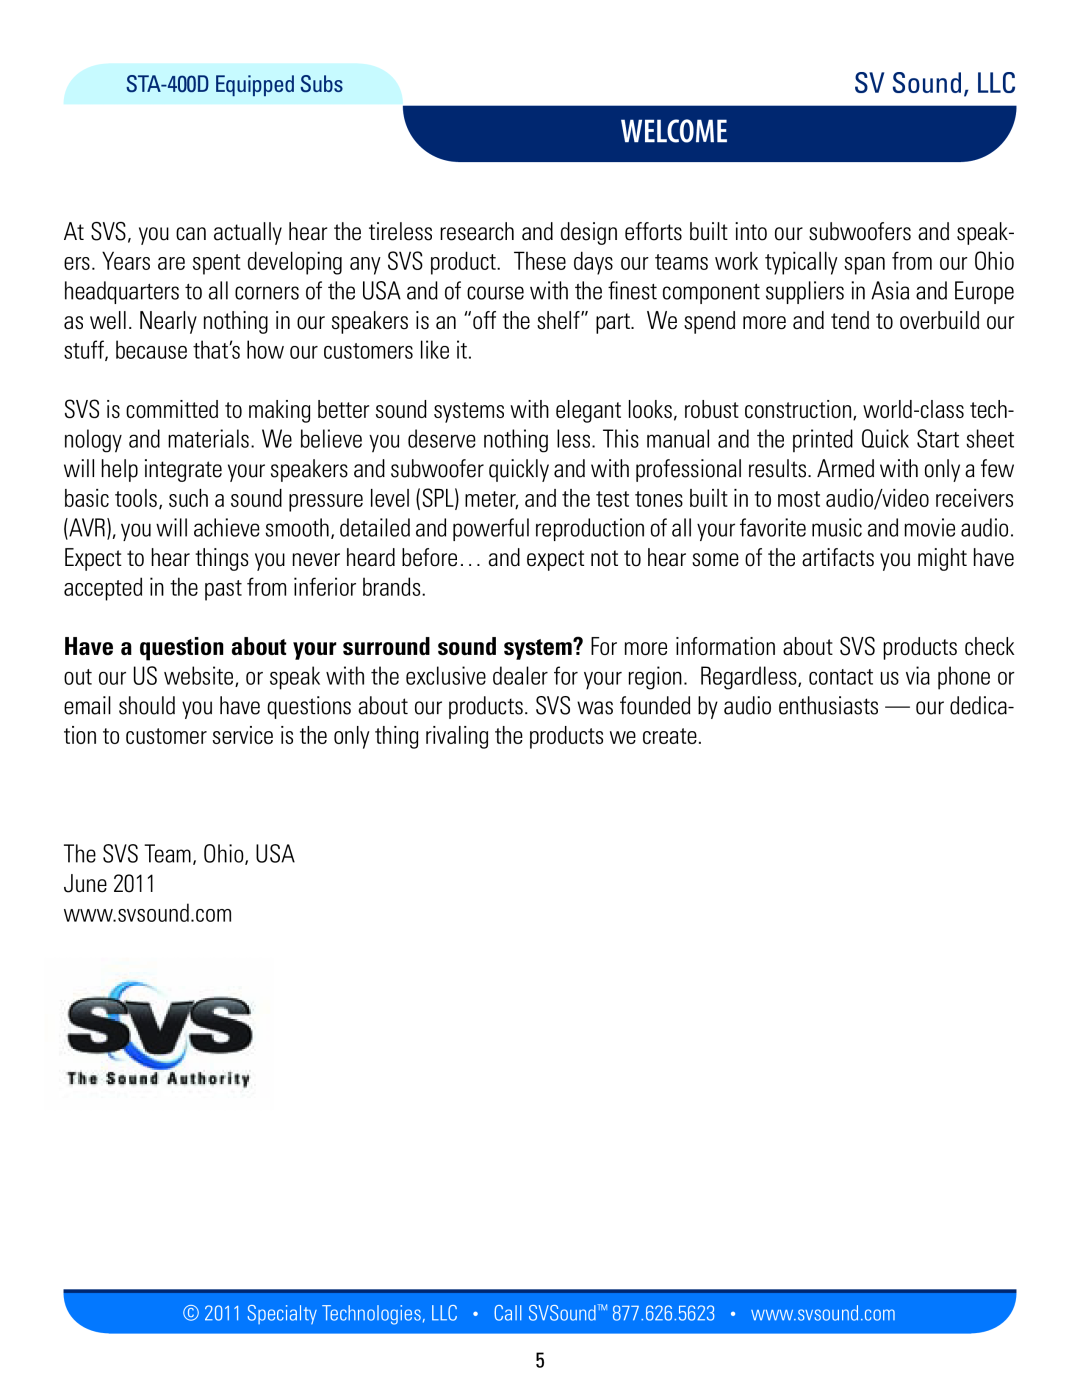 SV Sound SB12-NSD, PC12-NSD, PB12-NSD manual Welcome, SV Sound, LLC, STA-400DEquipped Subs 